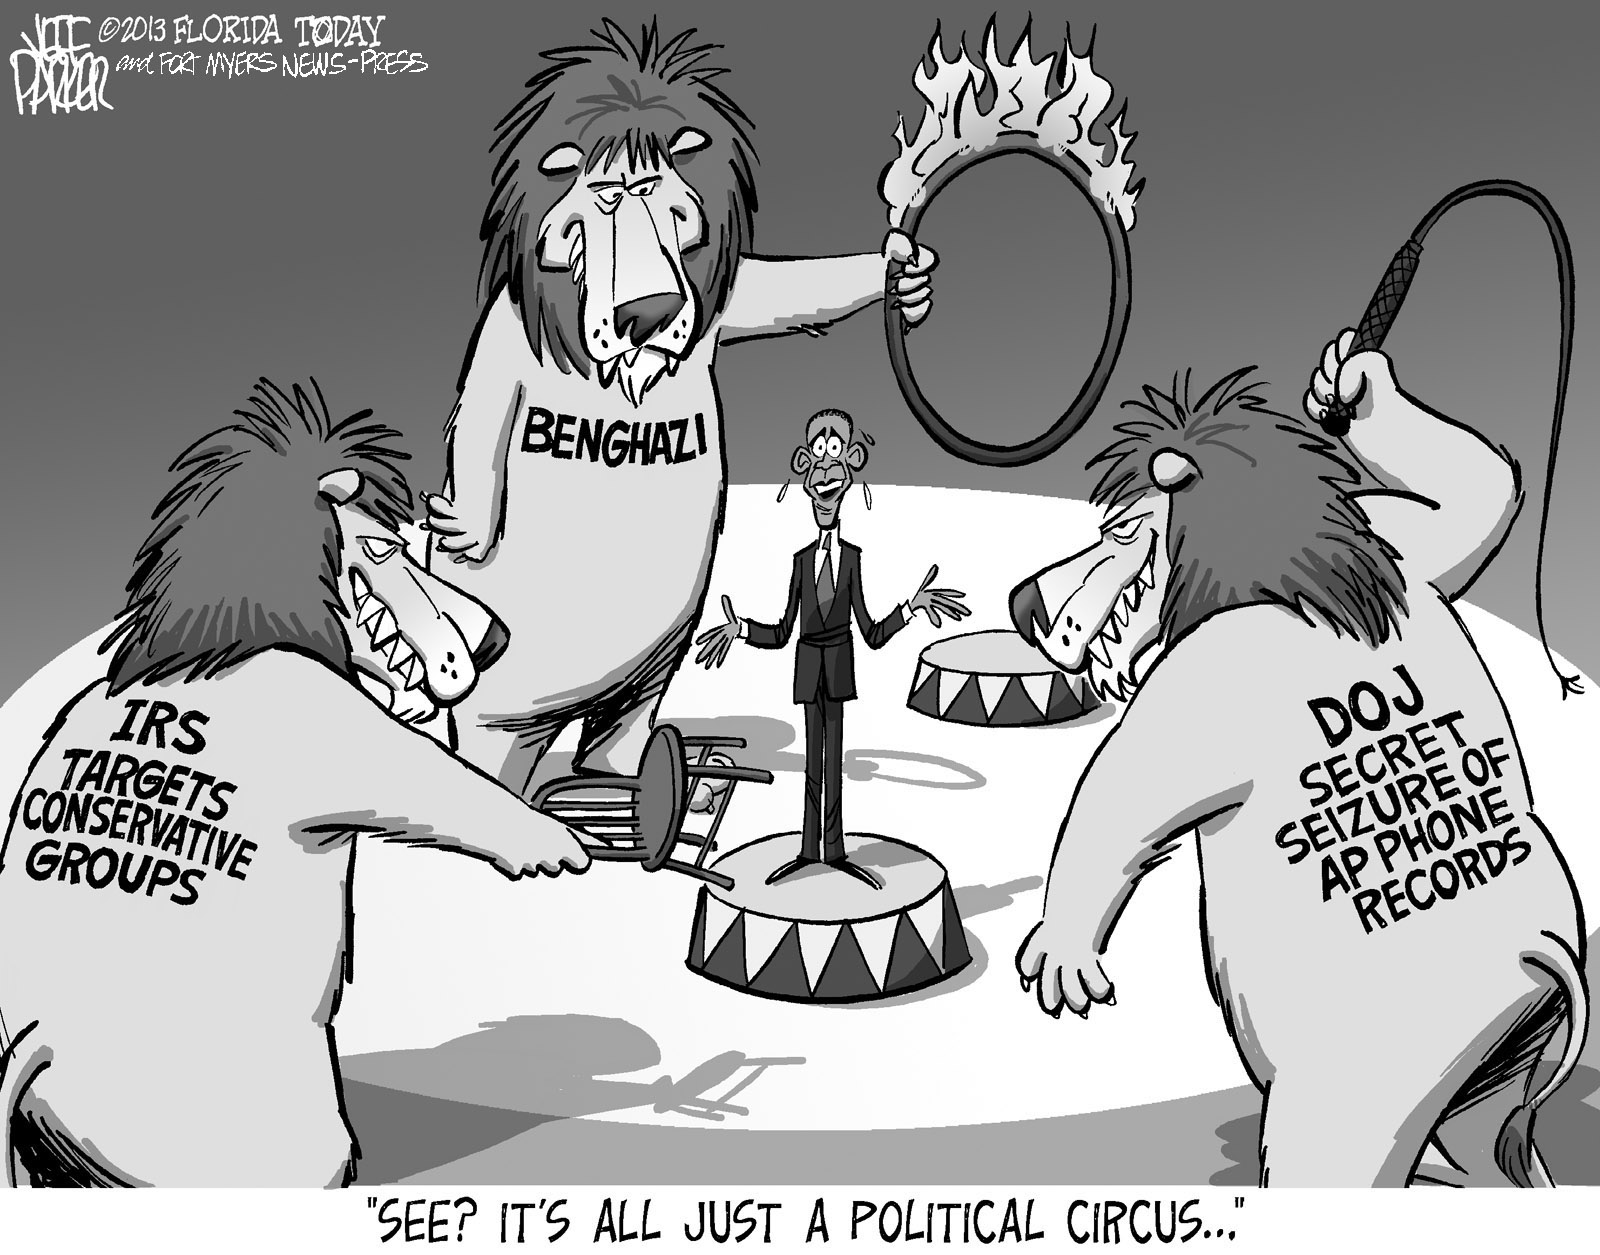 Just a Political Circus